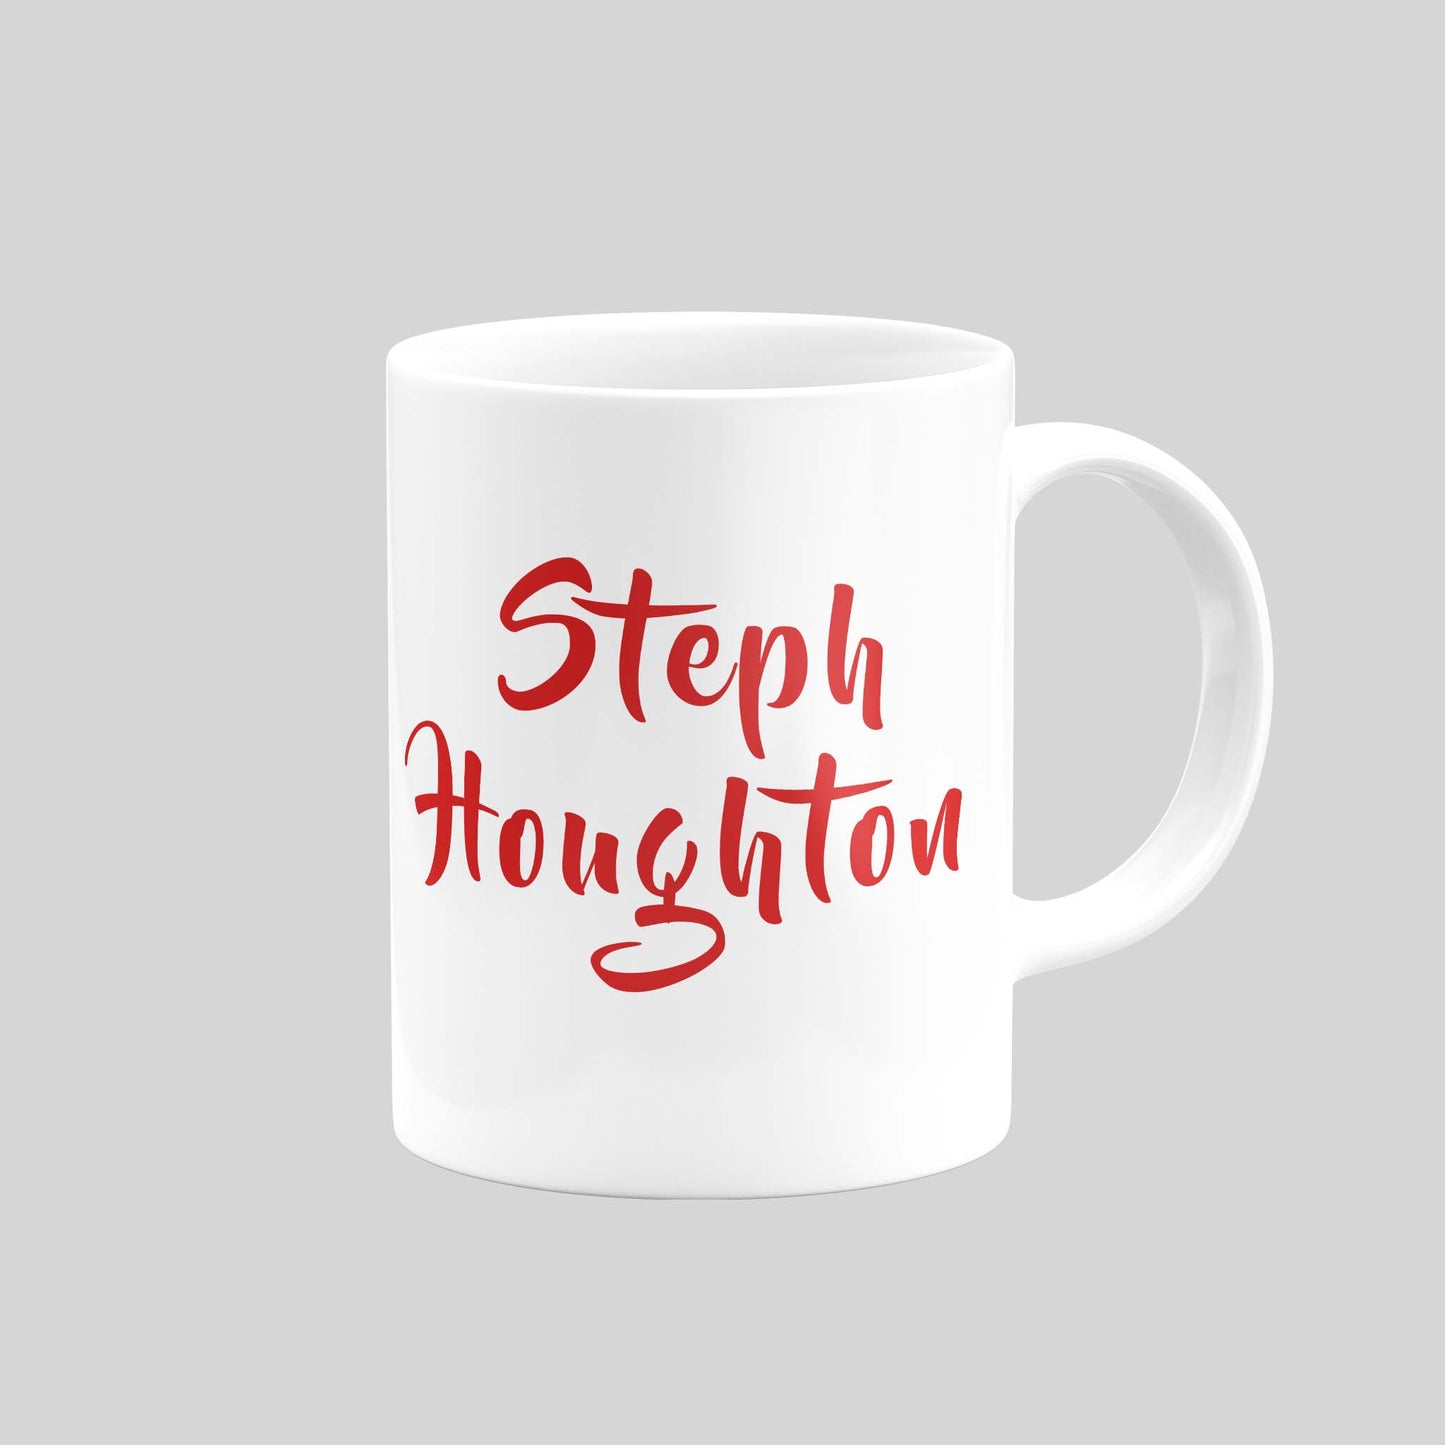 Steph Houghton Mug